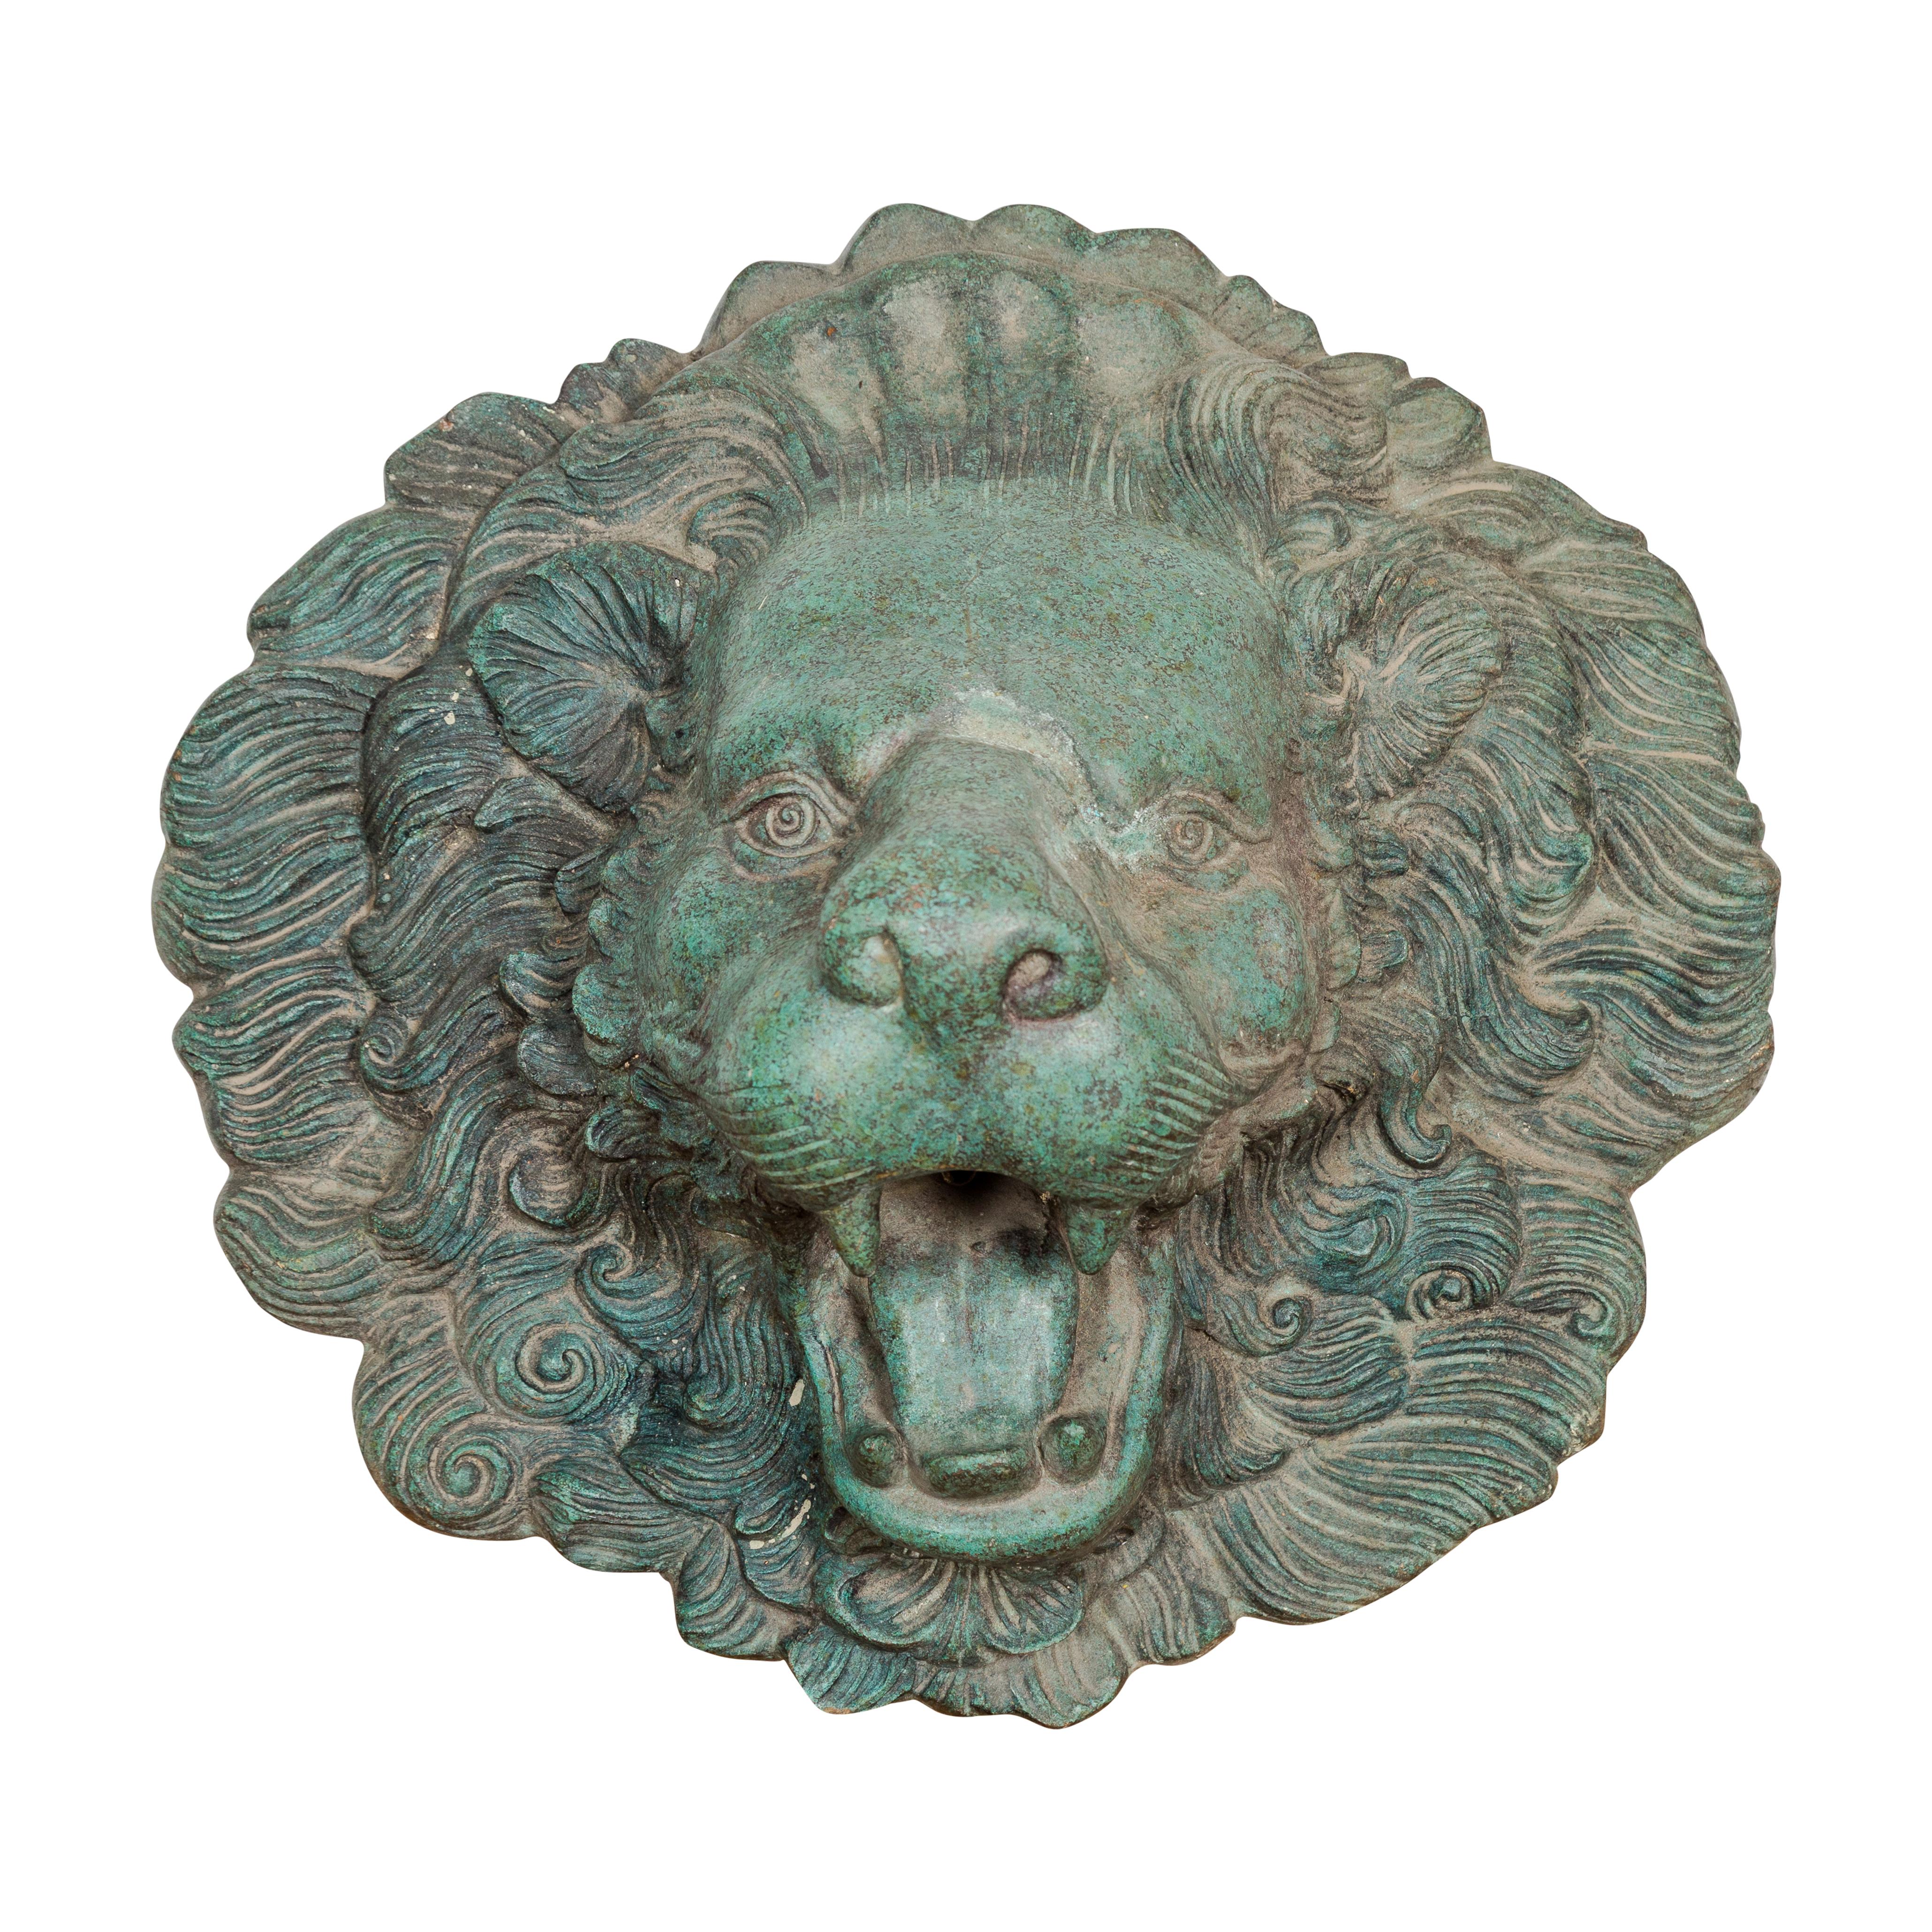 Heraldic Cast Bronze Lion Head Sculpture Tubed as a Fountain, Verdigris Patina 11